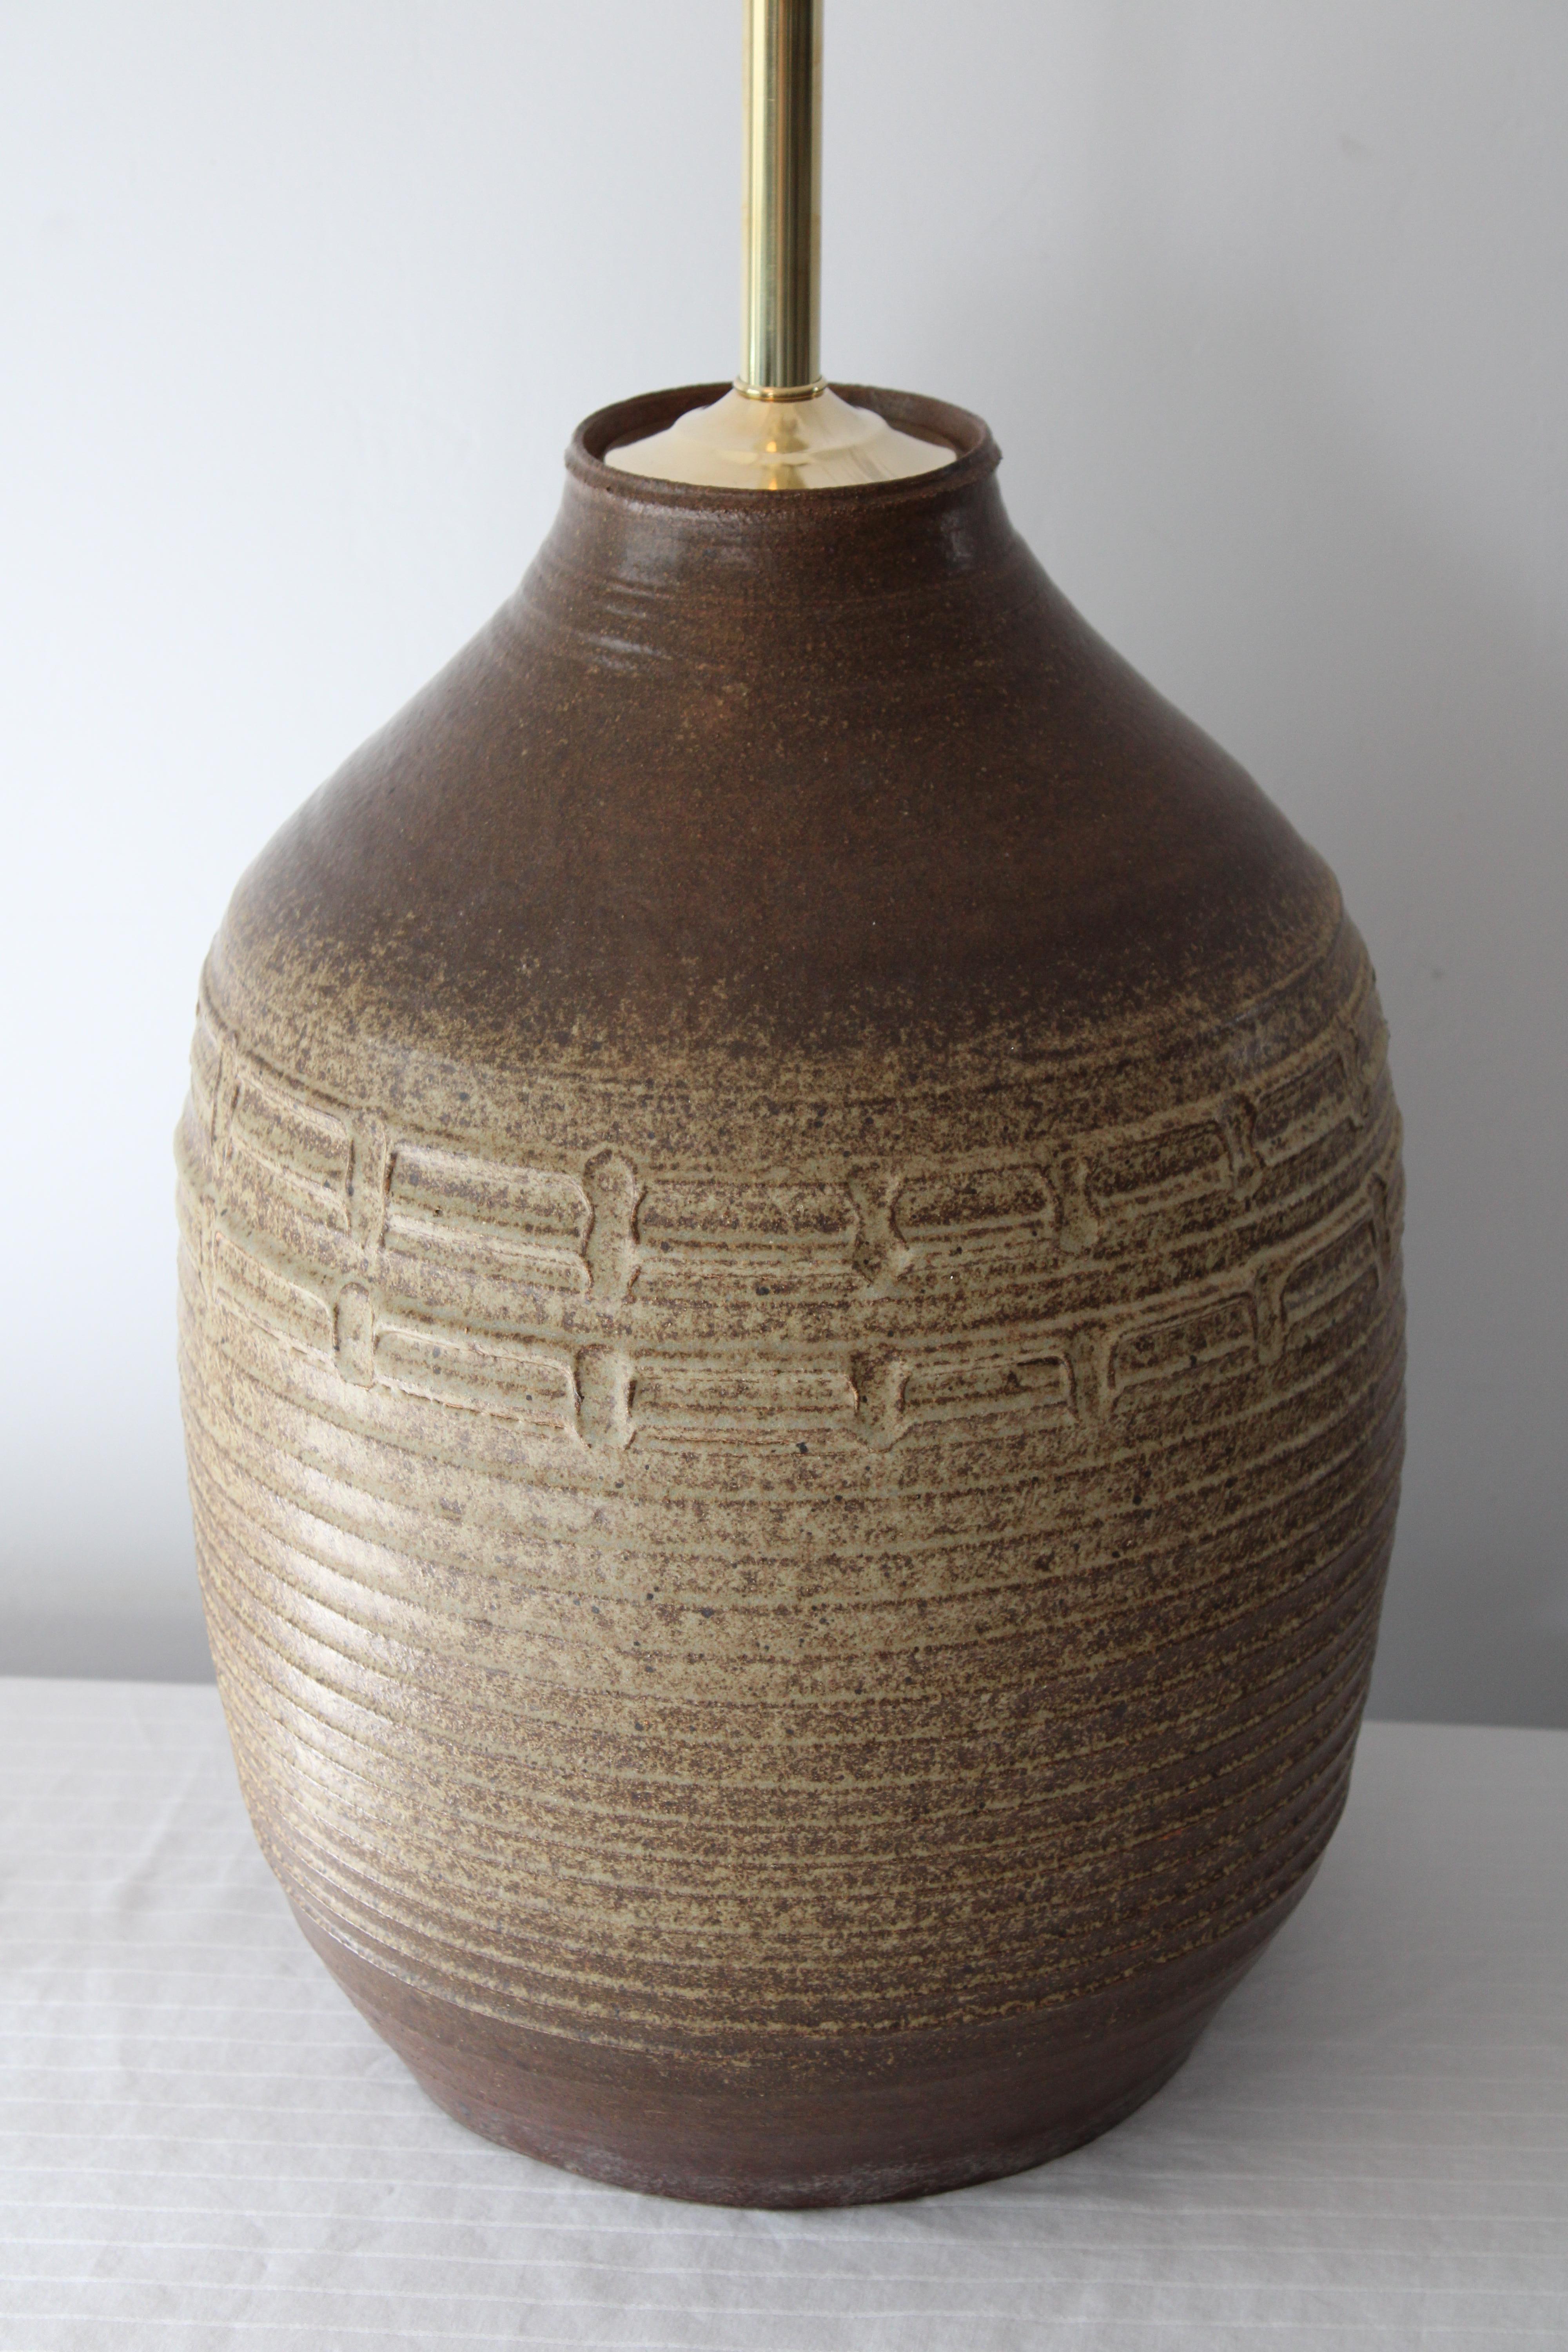 Ceramic lamp by Bob Kinzie. Ceramic portion is 17